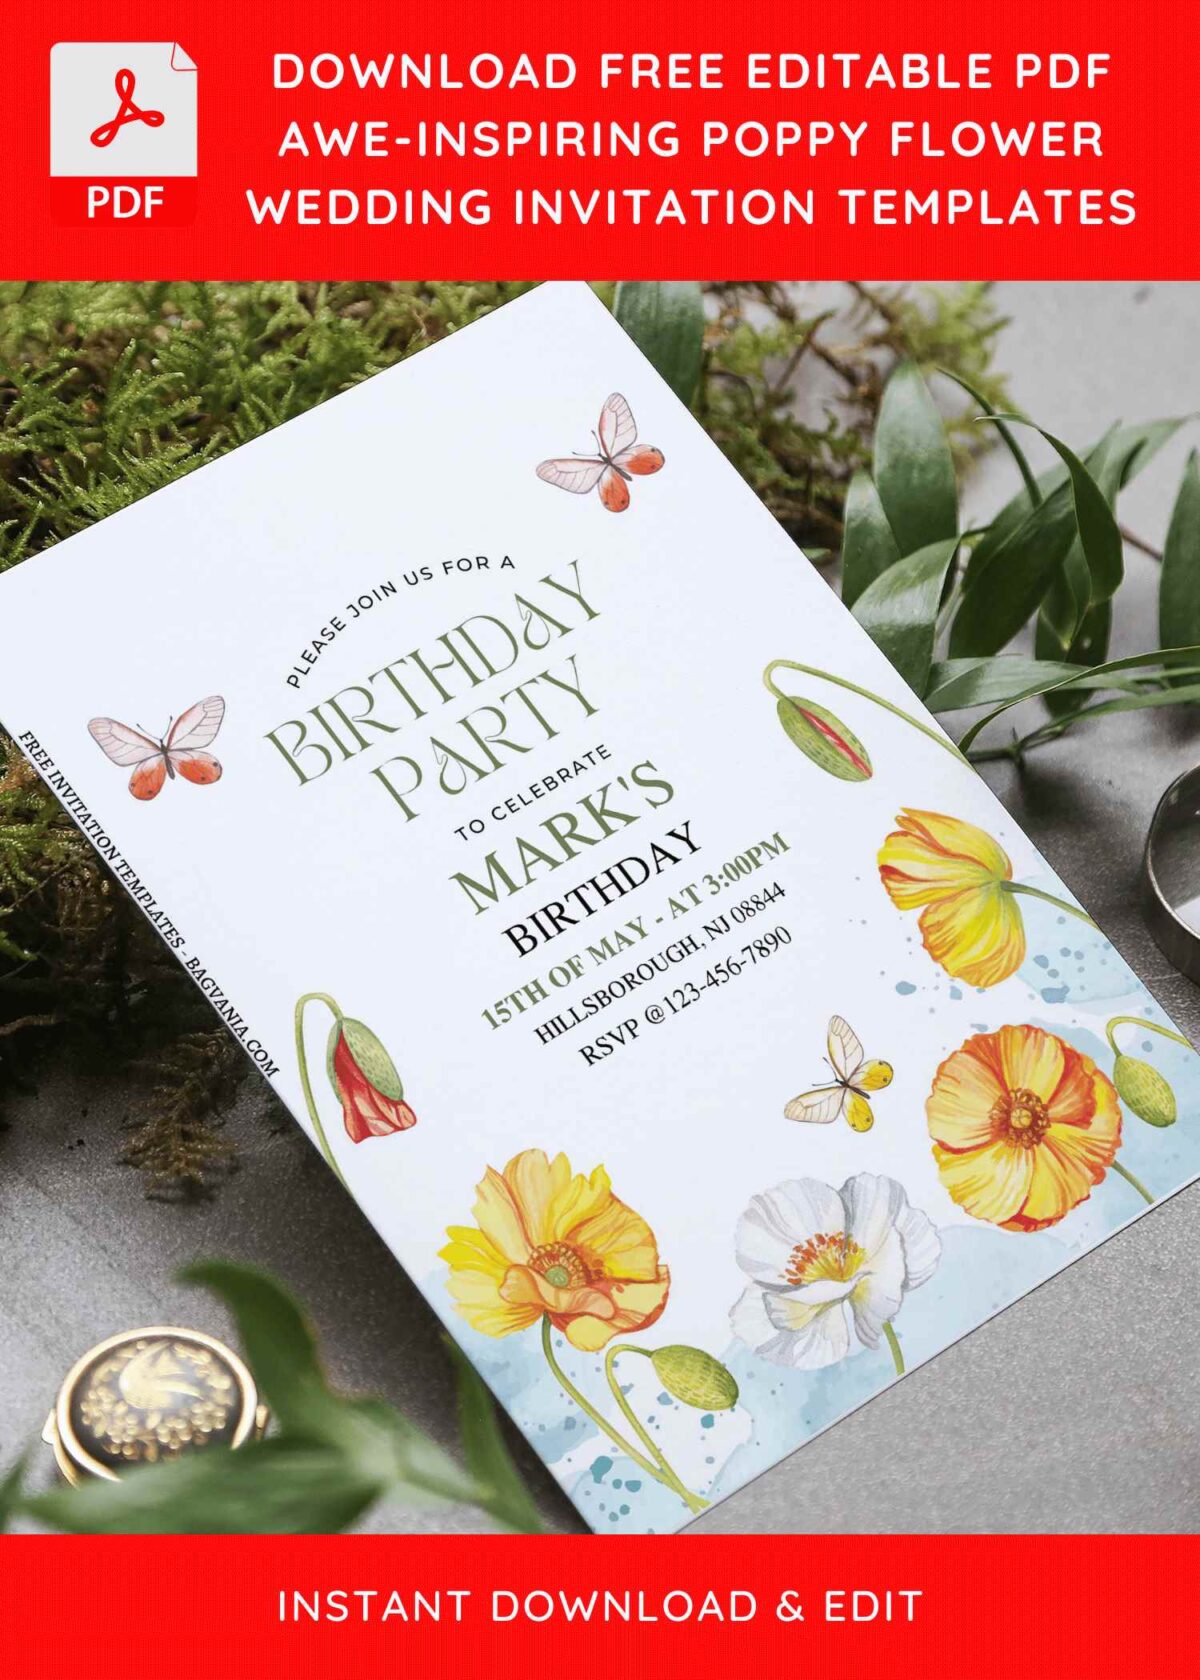 (Free Editable PDF) Eye-catching Butterfly Garden Wedding Invitation Templates F